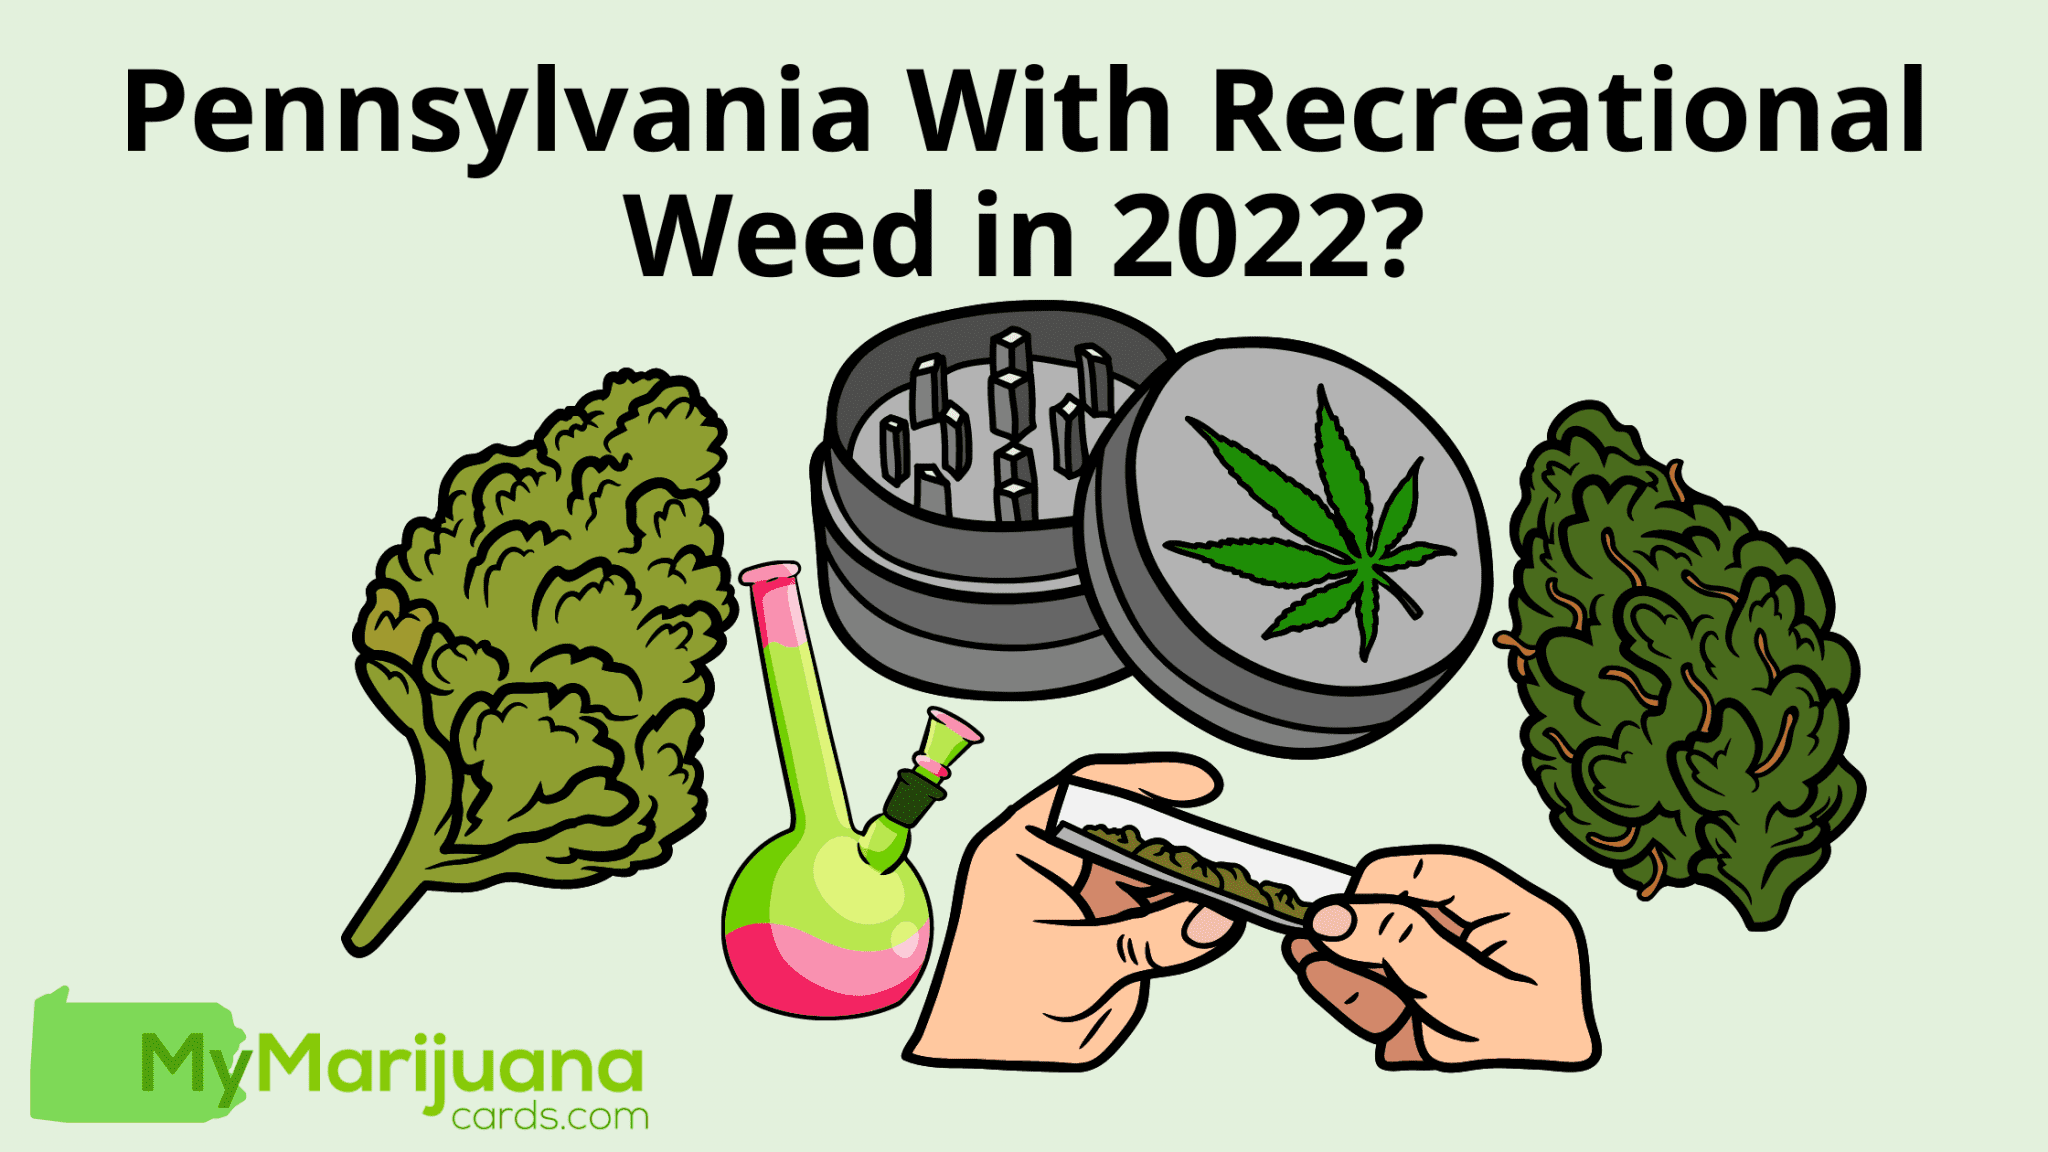 Pennsylvania With Recreational Weed in 2022? My Marijuana Cards